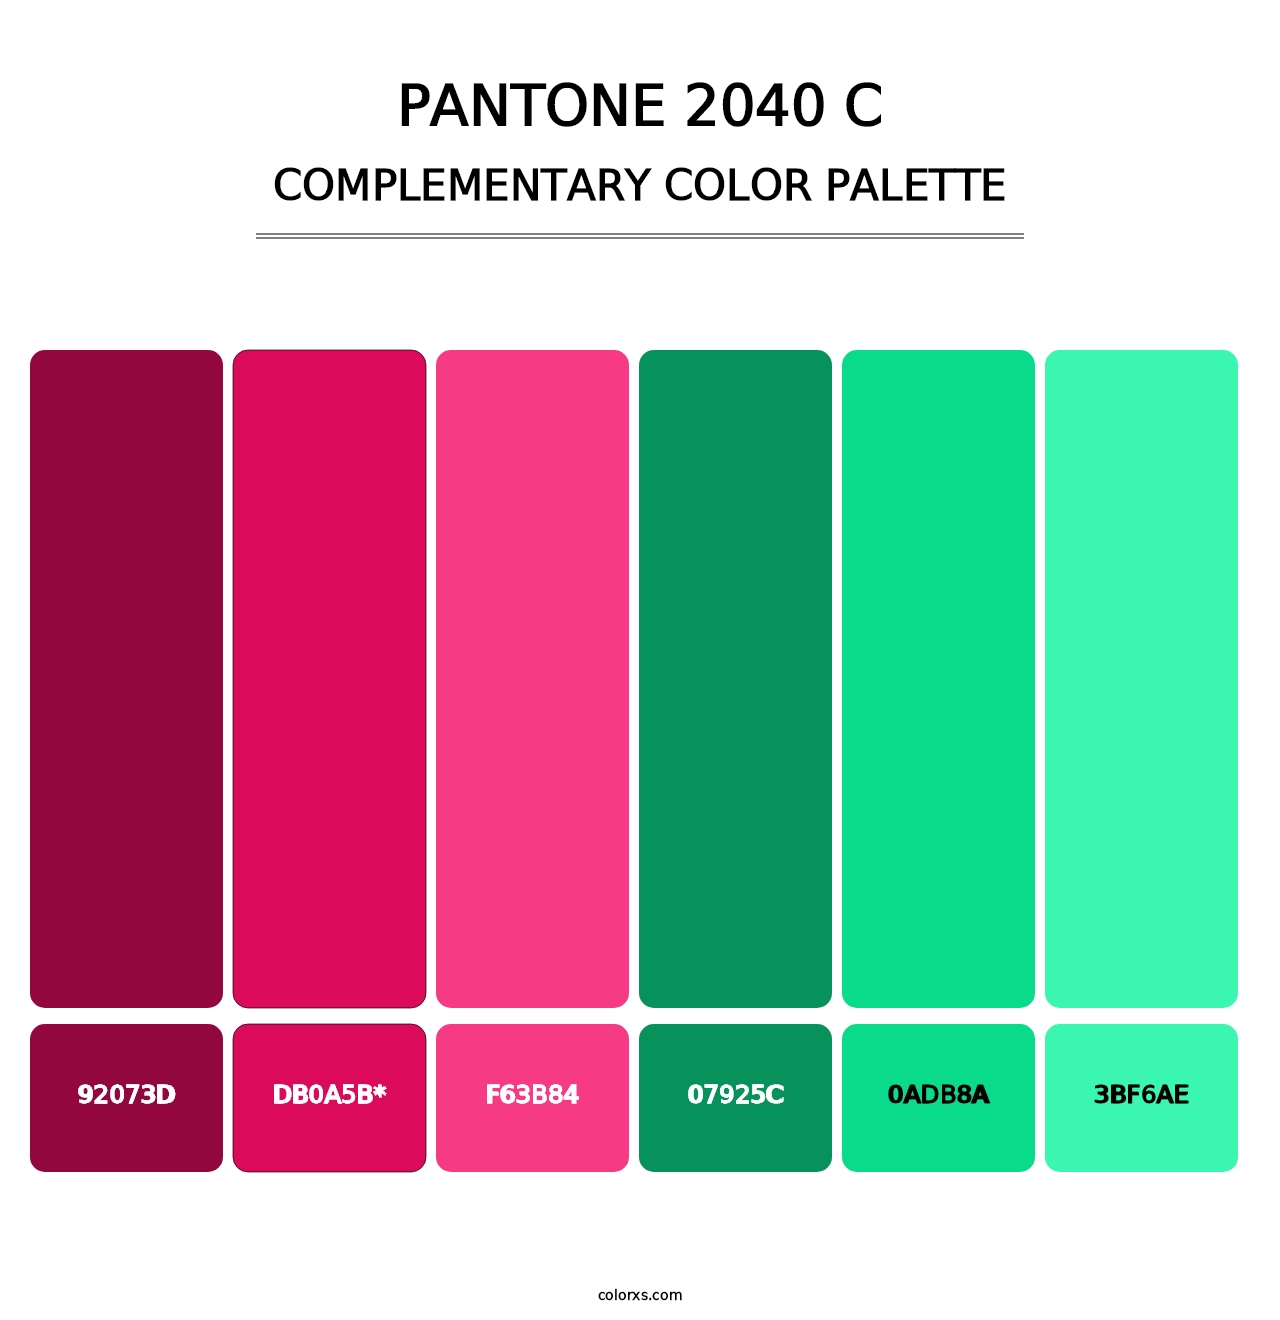 PANTONE 2040 C - Complementary Color Palette